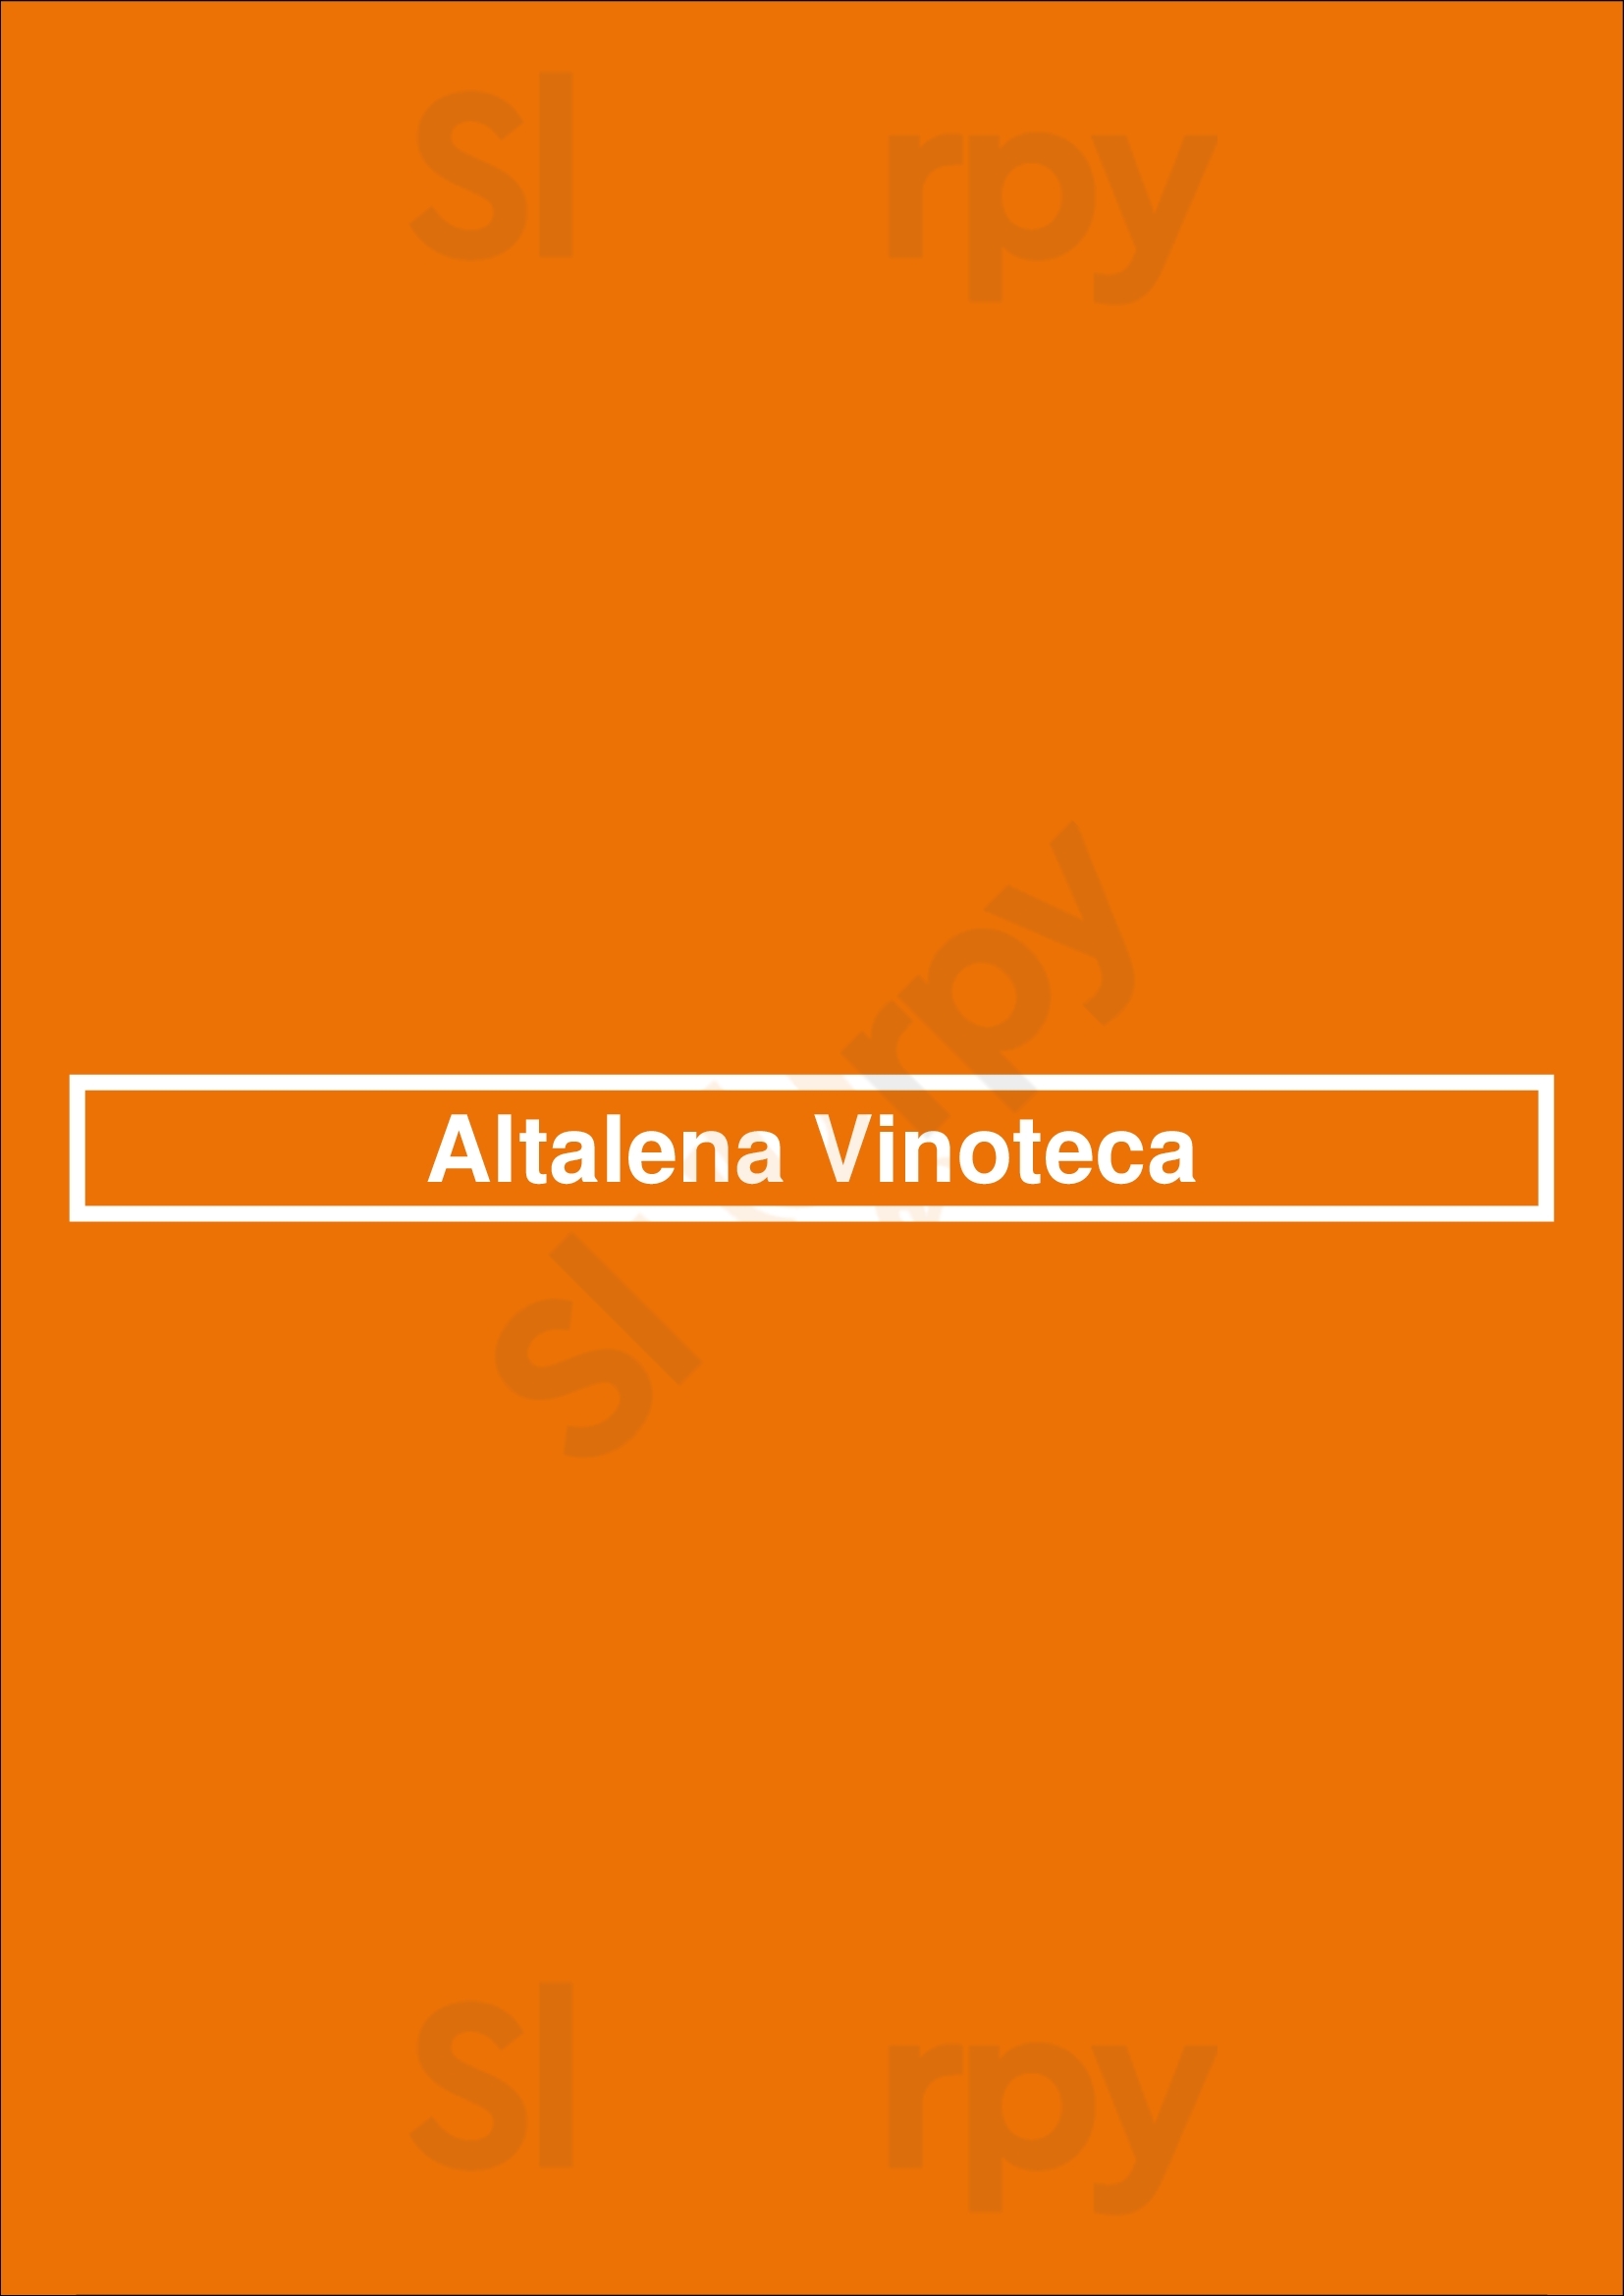 Altalena Vinoteca San Francisco Menu - 1